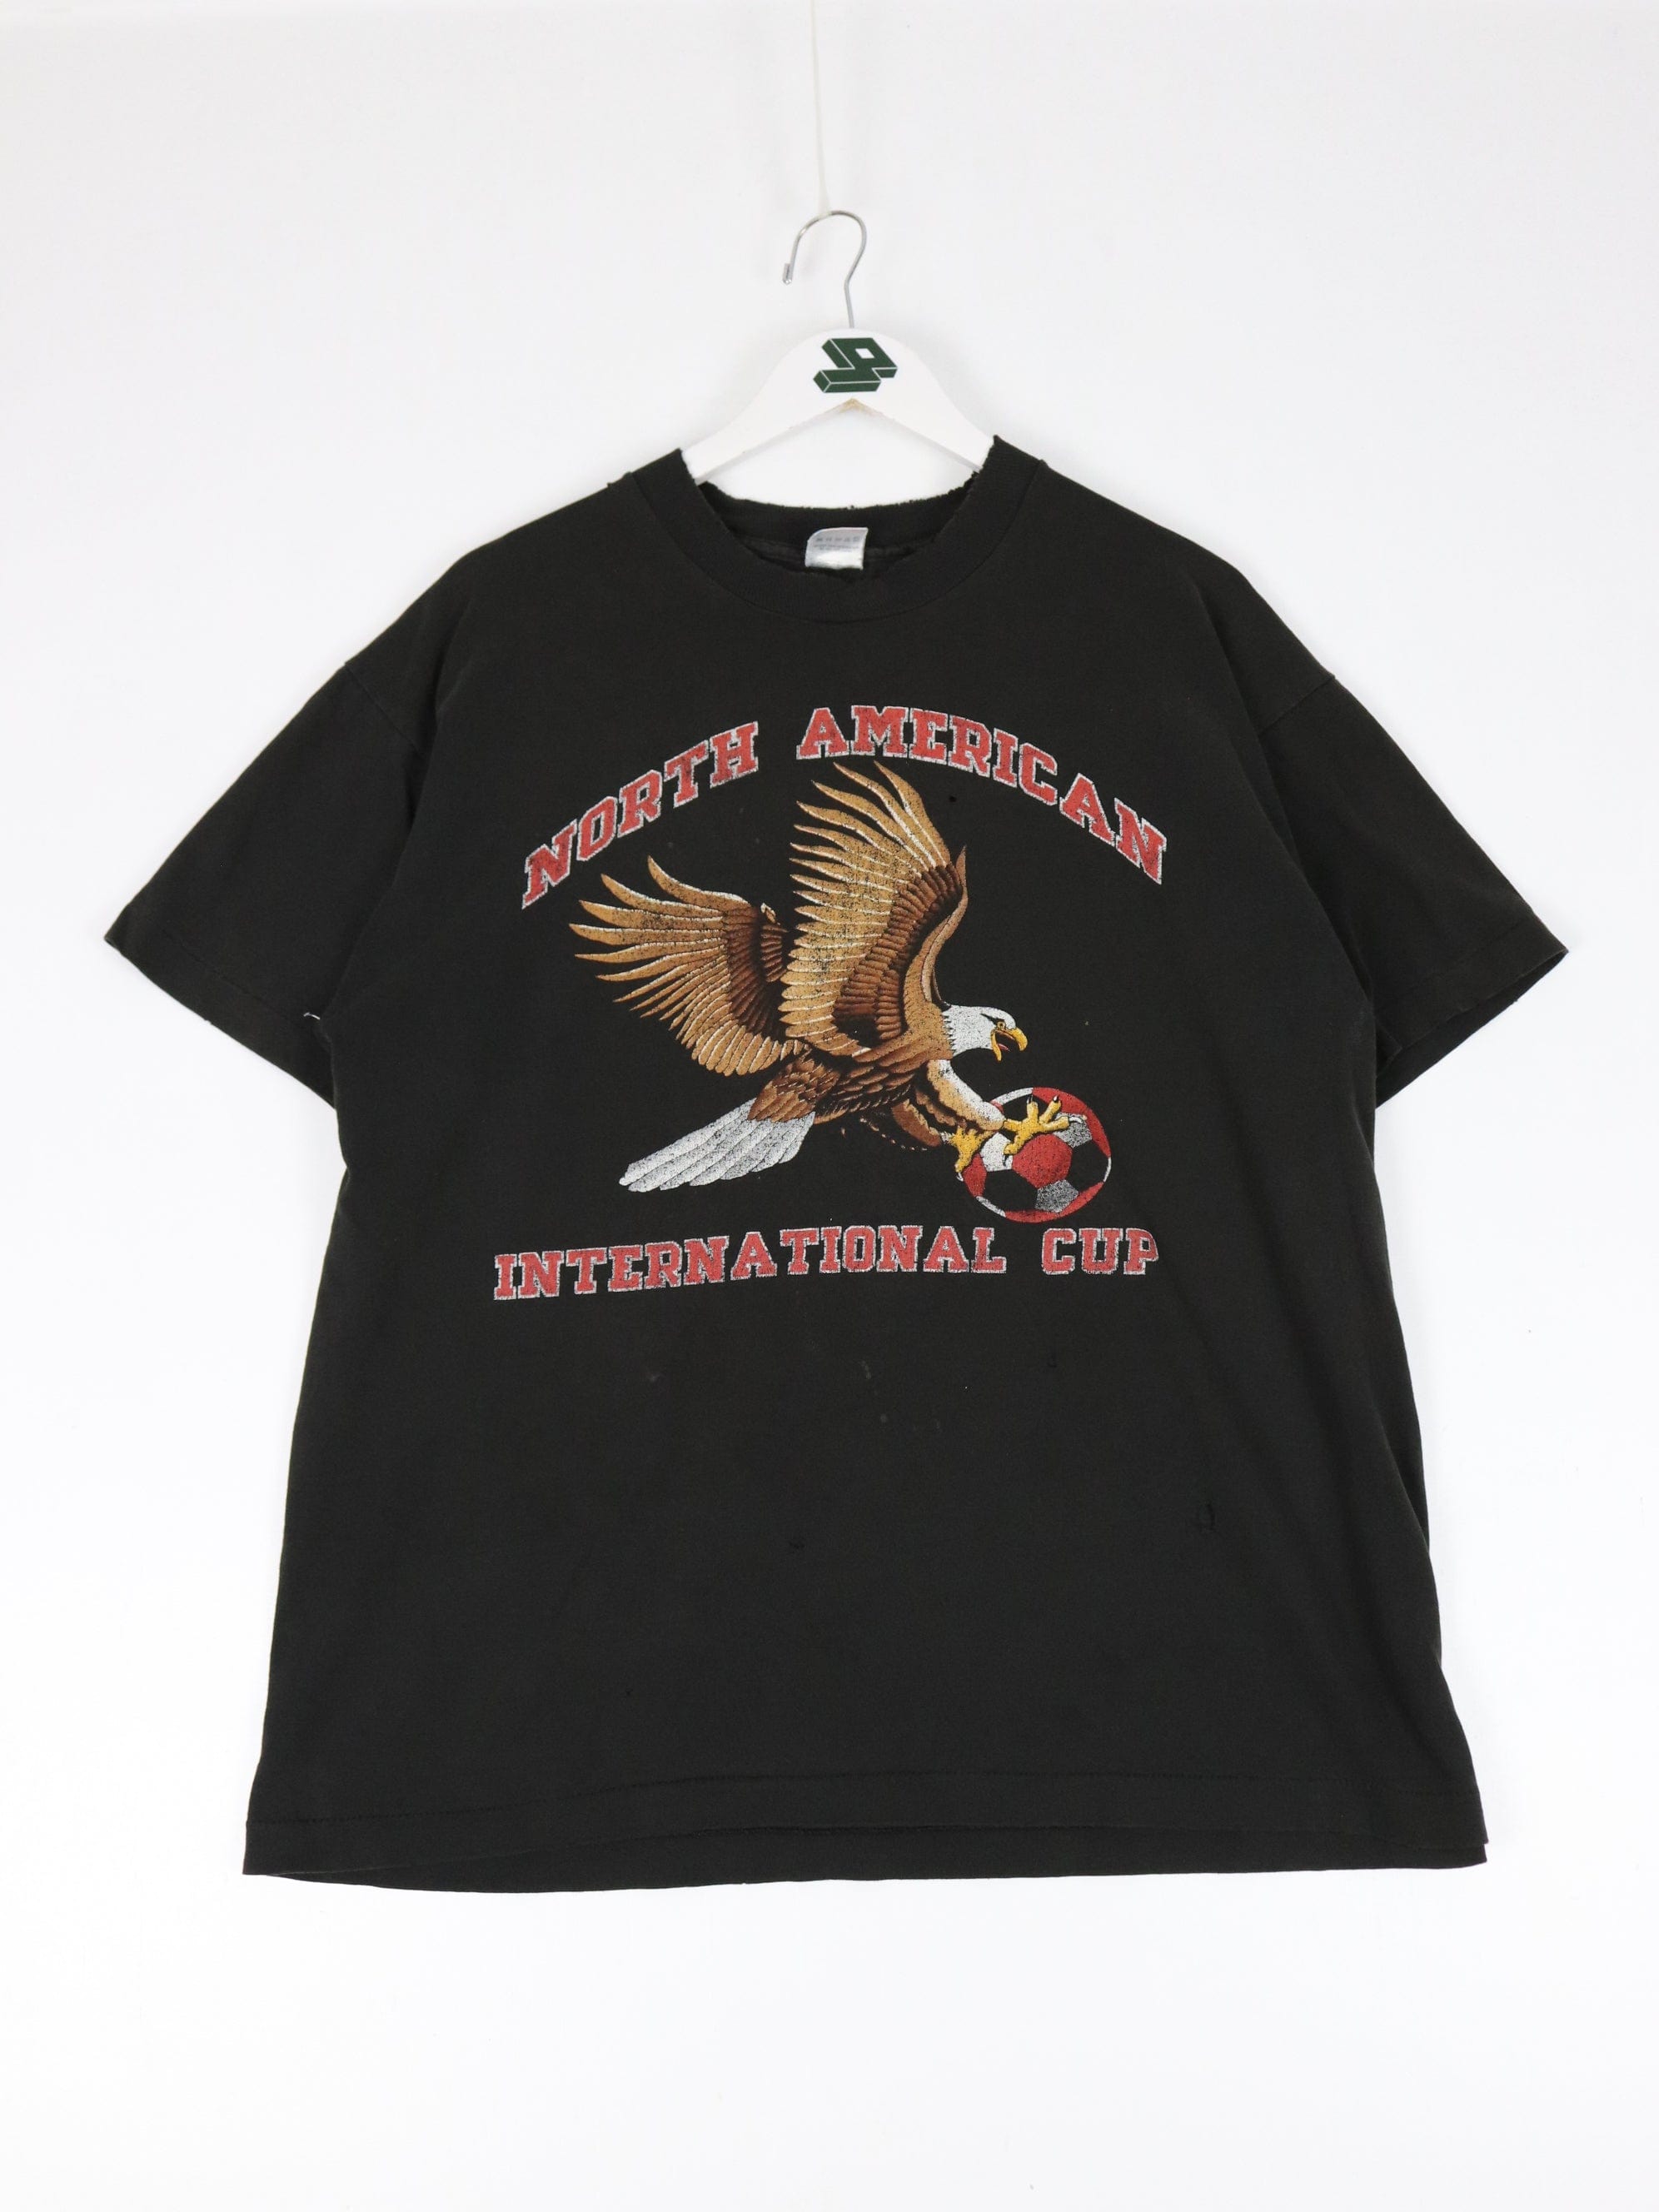 Vintage North American International Cup T Shirt Mens XL Black